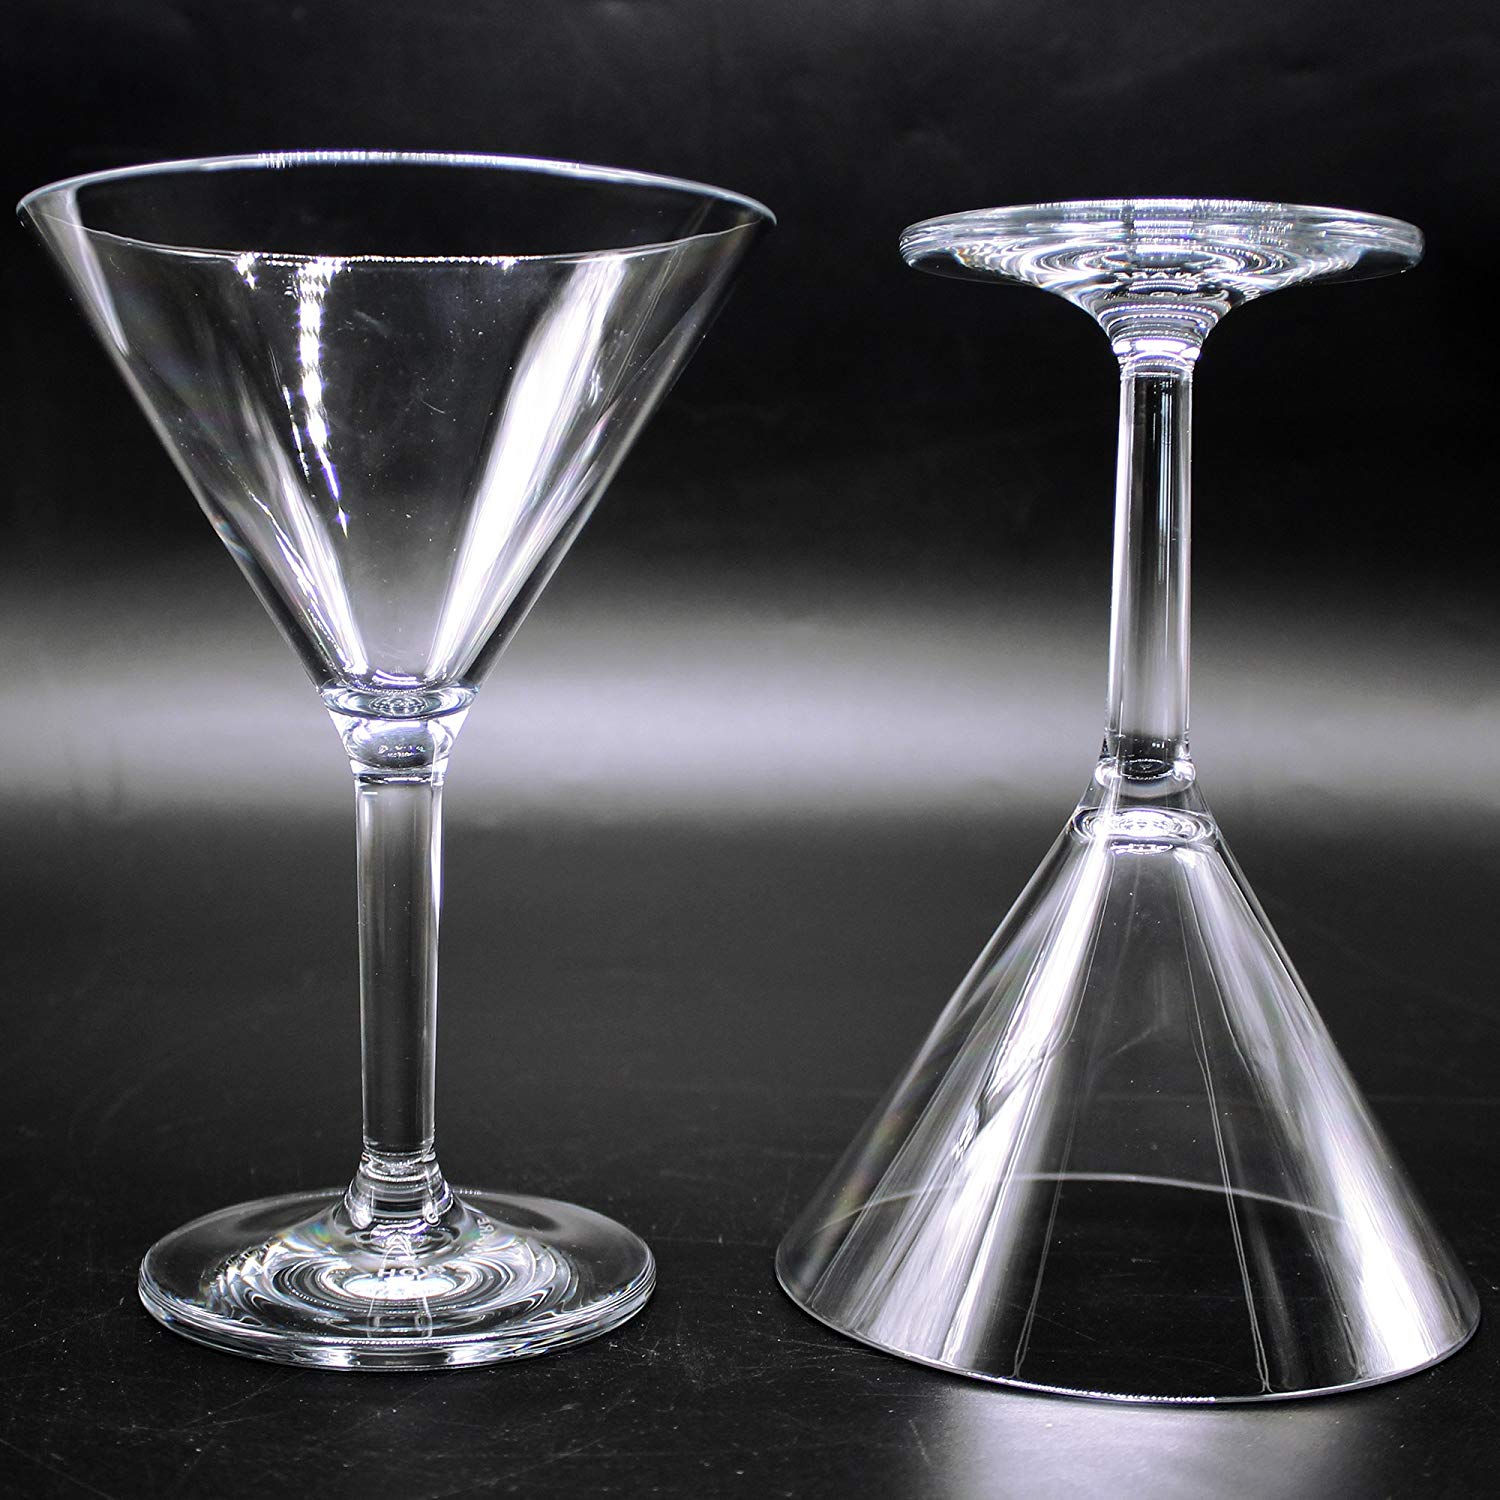 Heavy Base Martini Glasses, Set of 2